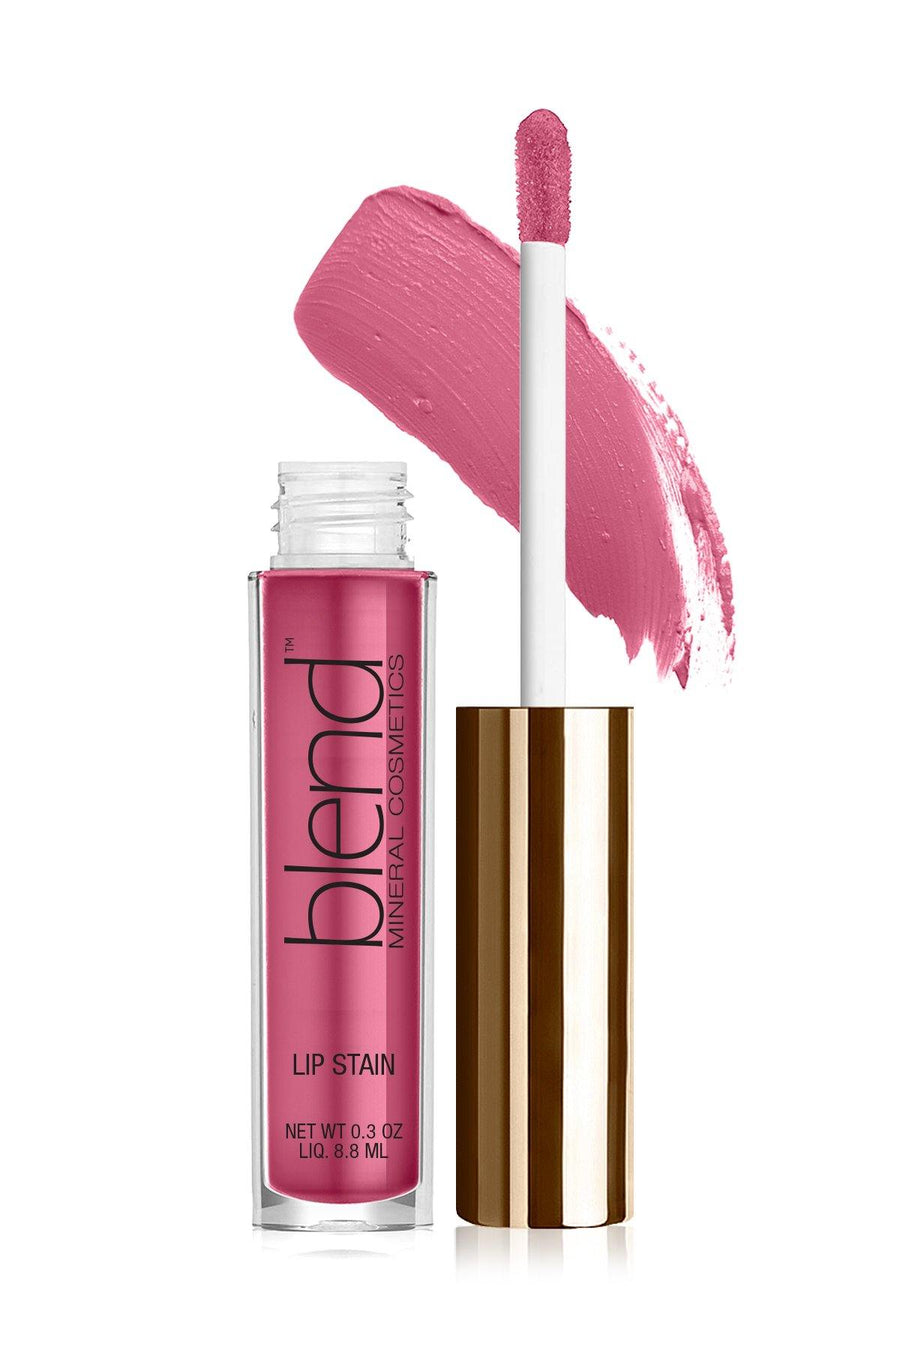 Lip Stain 1 - Desert Spice - Blend Mineral Cosmetics